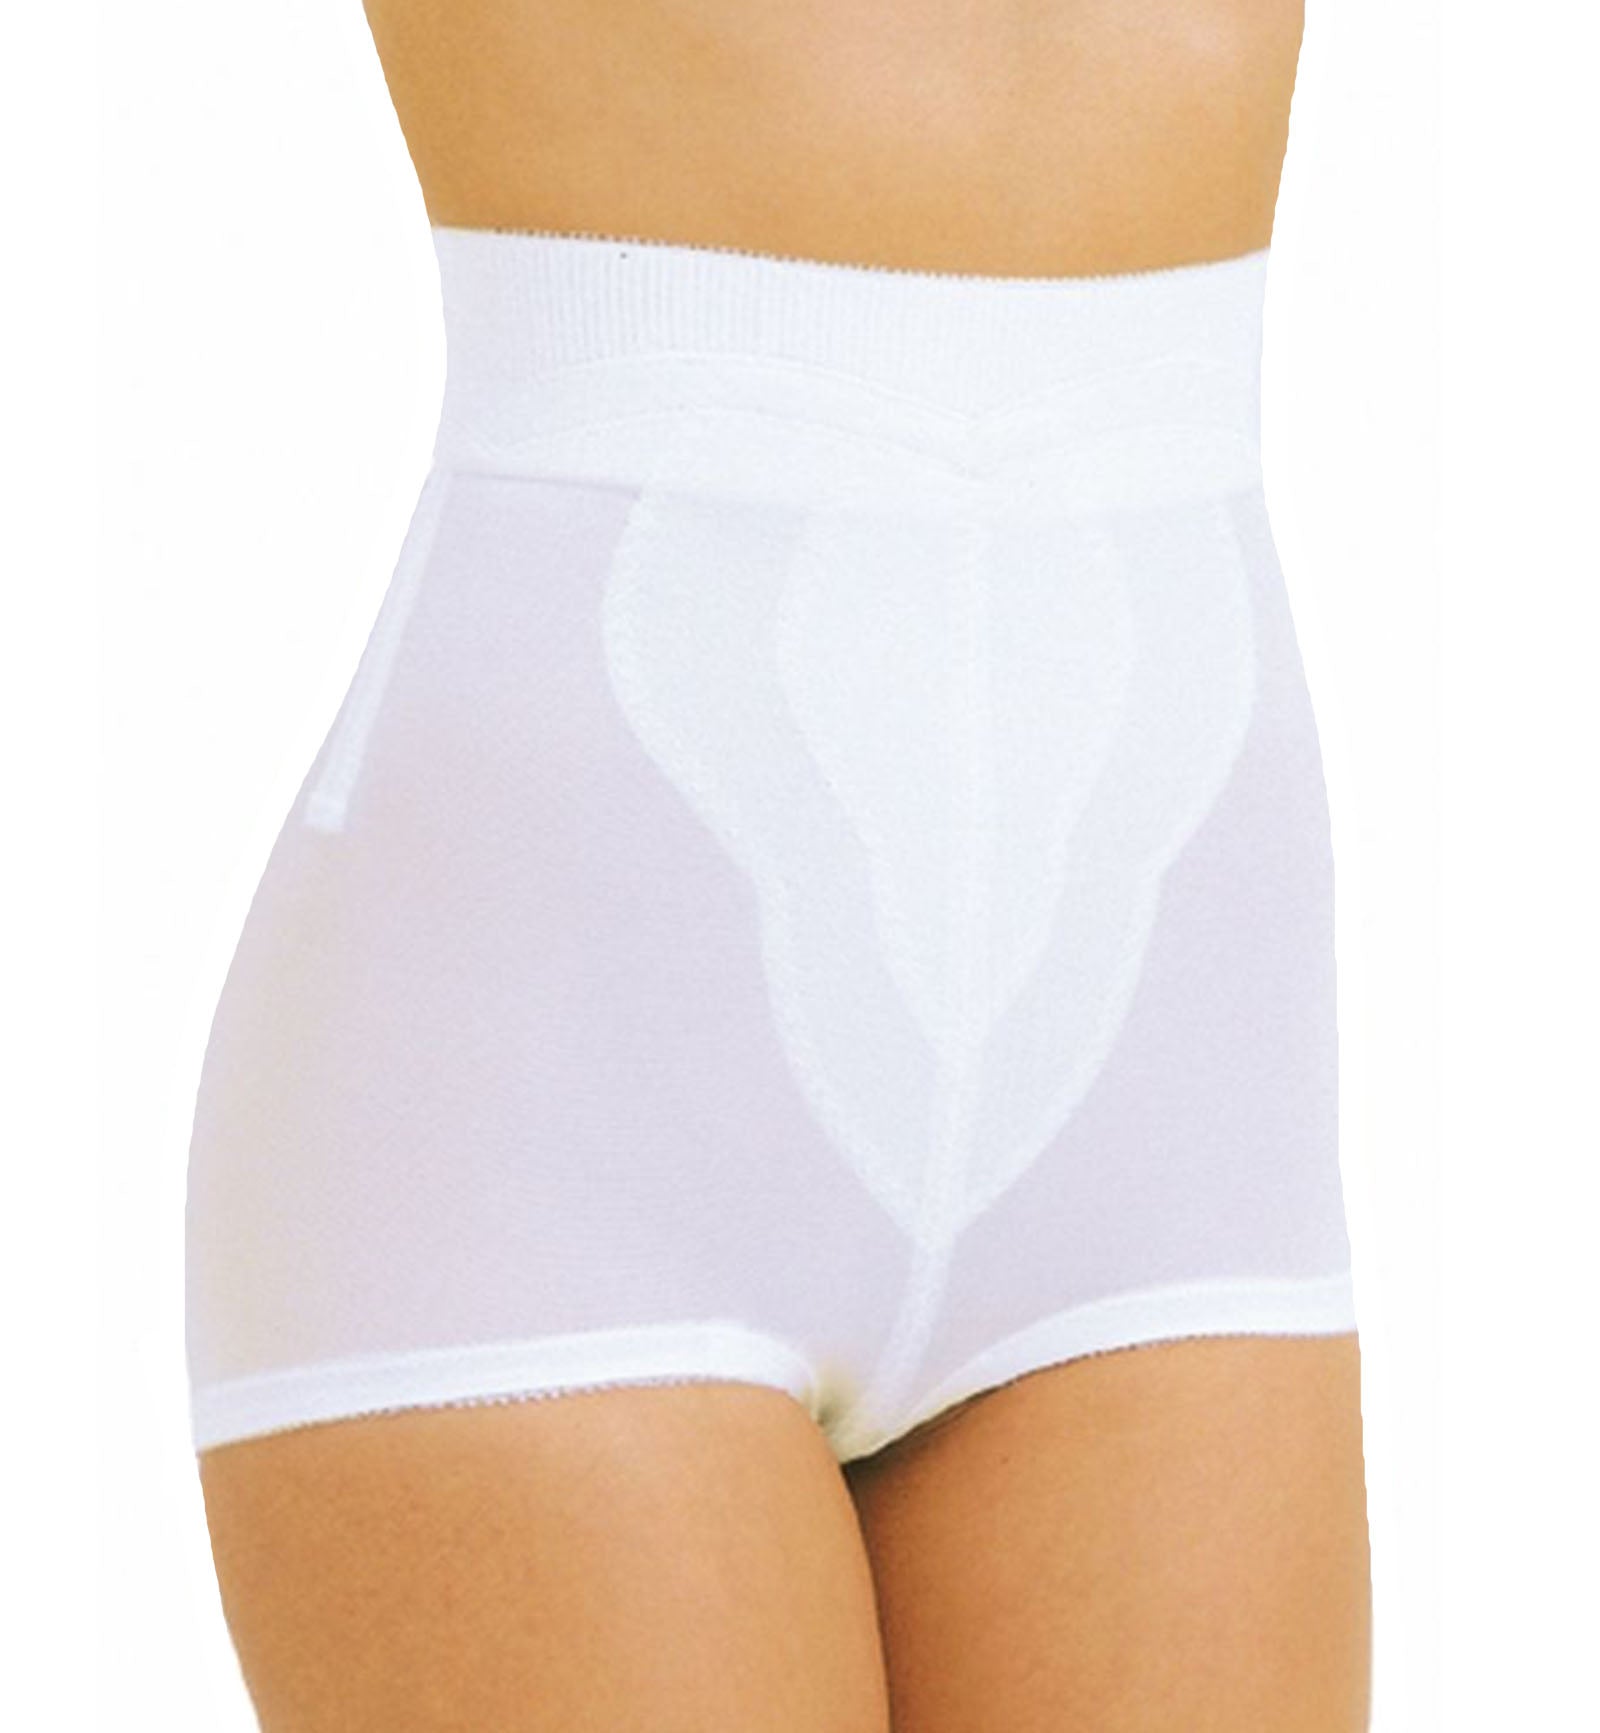 Rago Medium Control High Waist Shaping Panty (6296),Small,White - White,Small